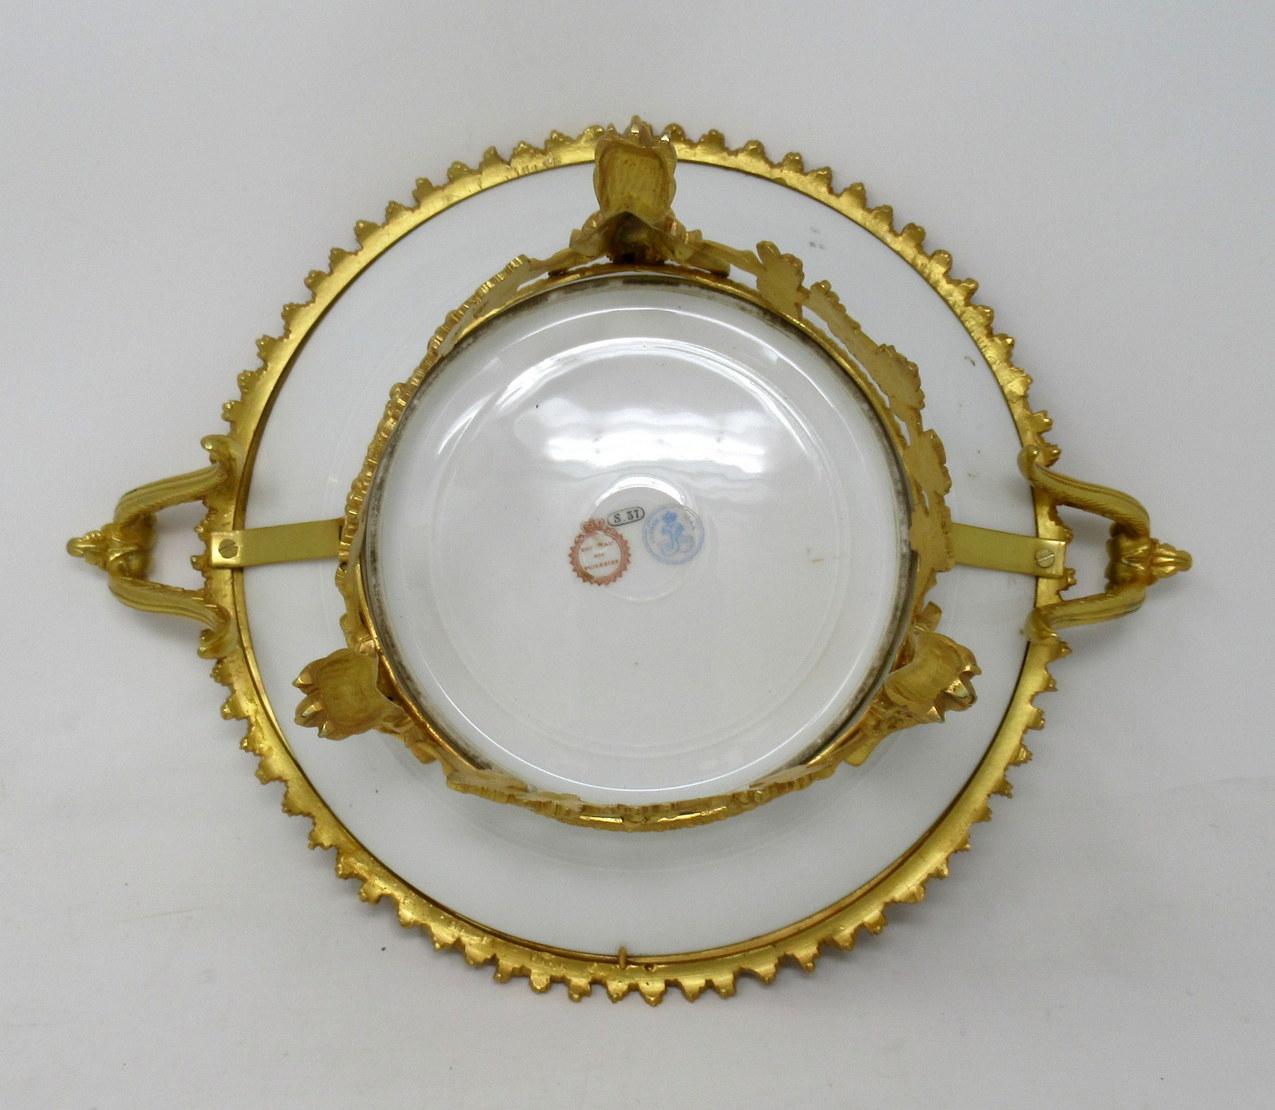 19th Century Antique French Sevres Ormolu Gilt Bronze Dore Porcelain Tazza Cabinet Plate Dish